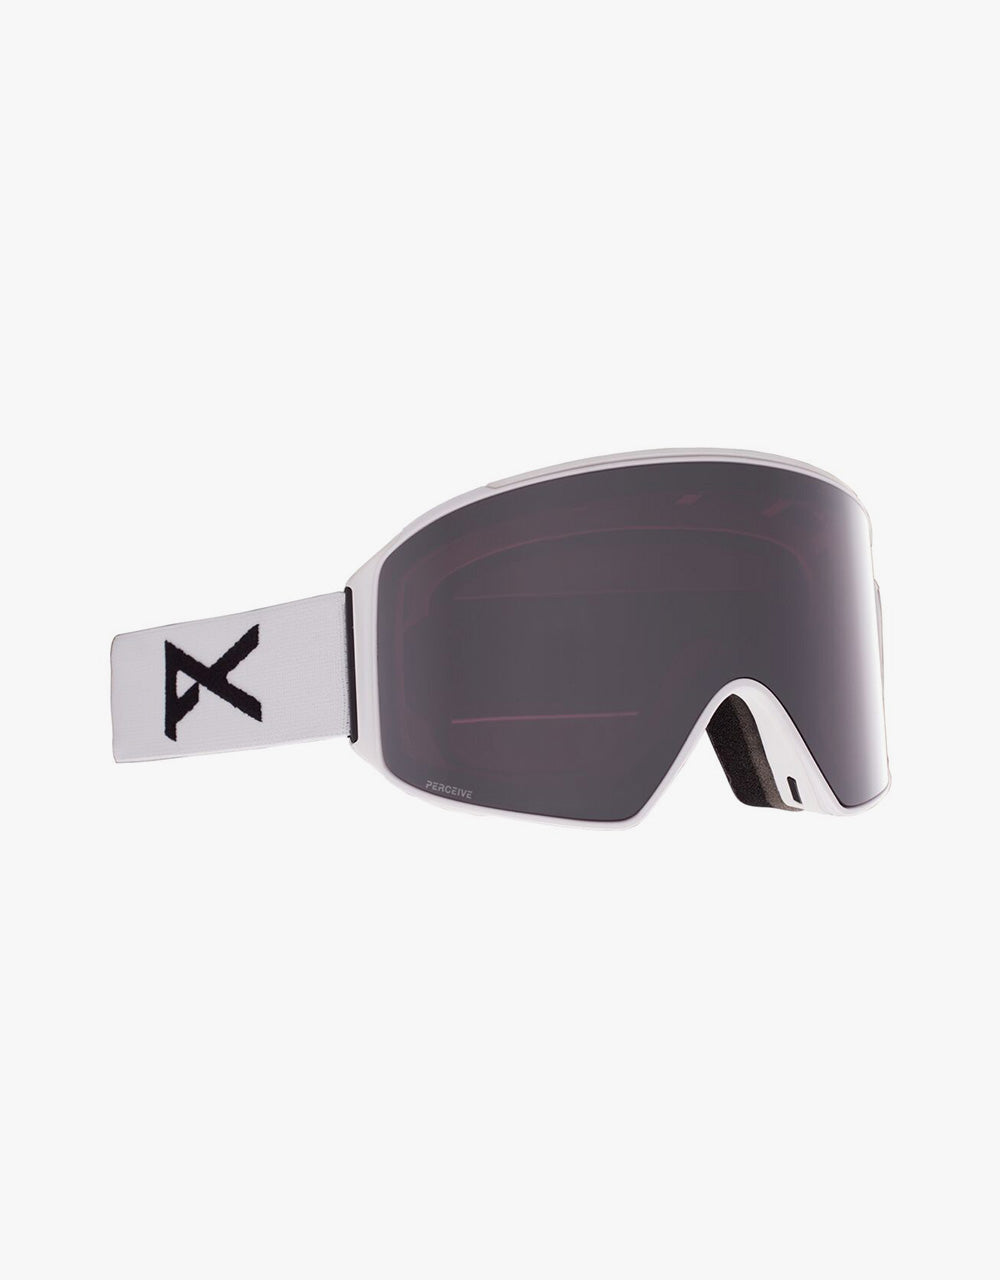 Anon M4 MFI® Cylindrical Snowboard Goggles - White/Perceive Sunny Onyx